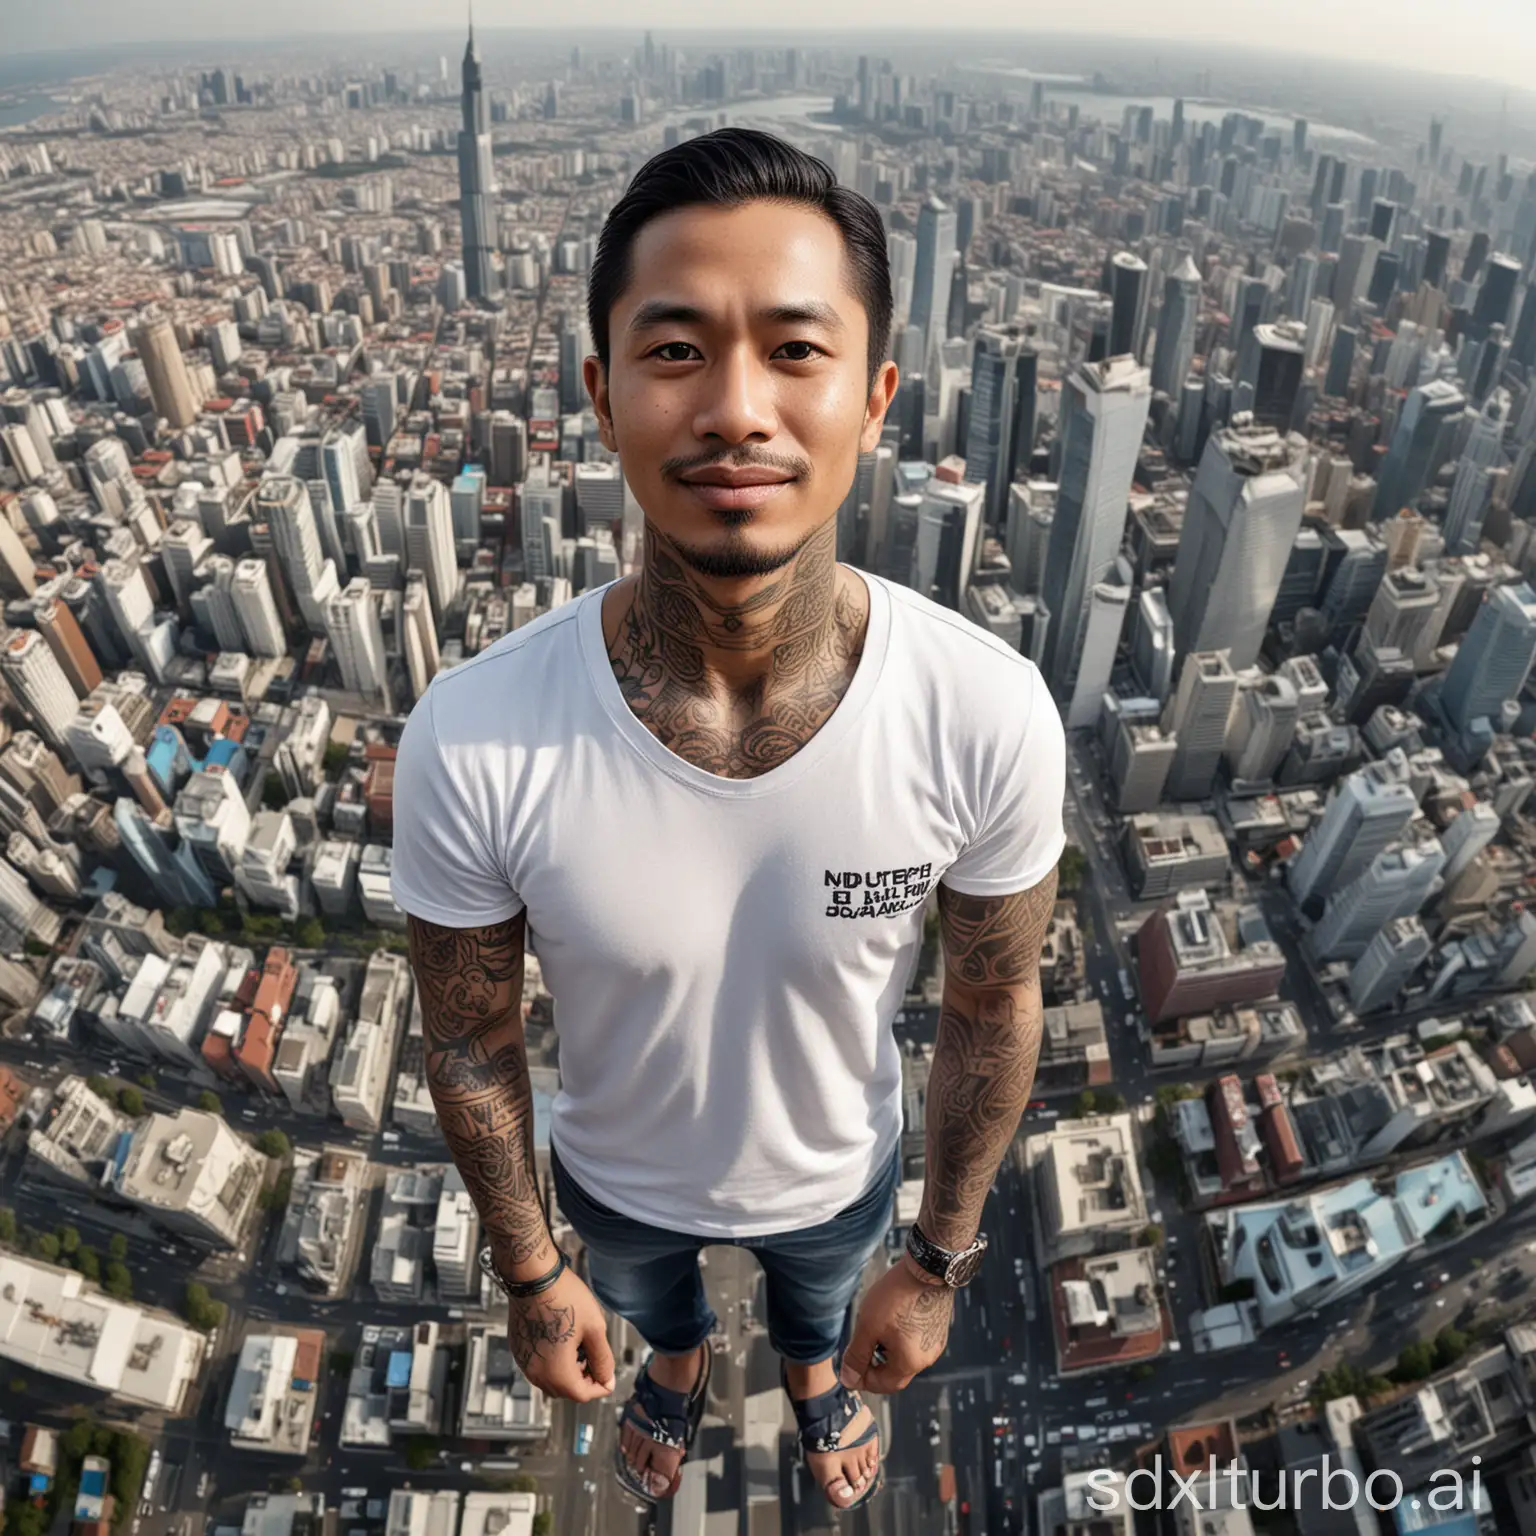 Urban-Adventurer-Tattooed-Man-on-City-Skyscraper-with-Cameraman